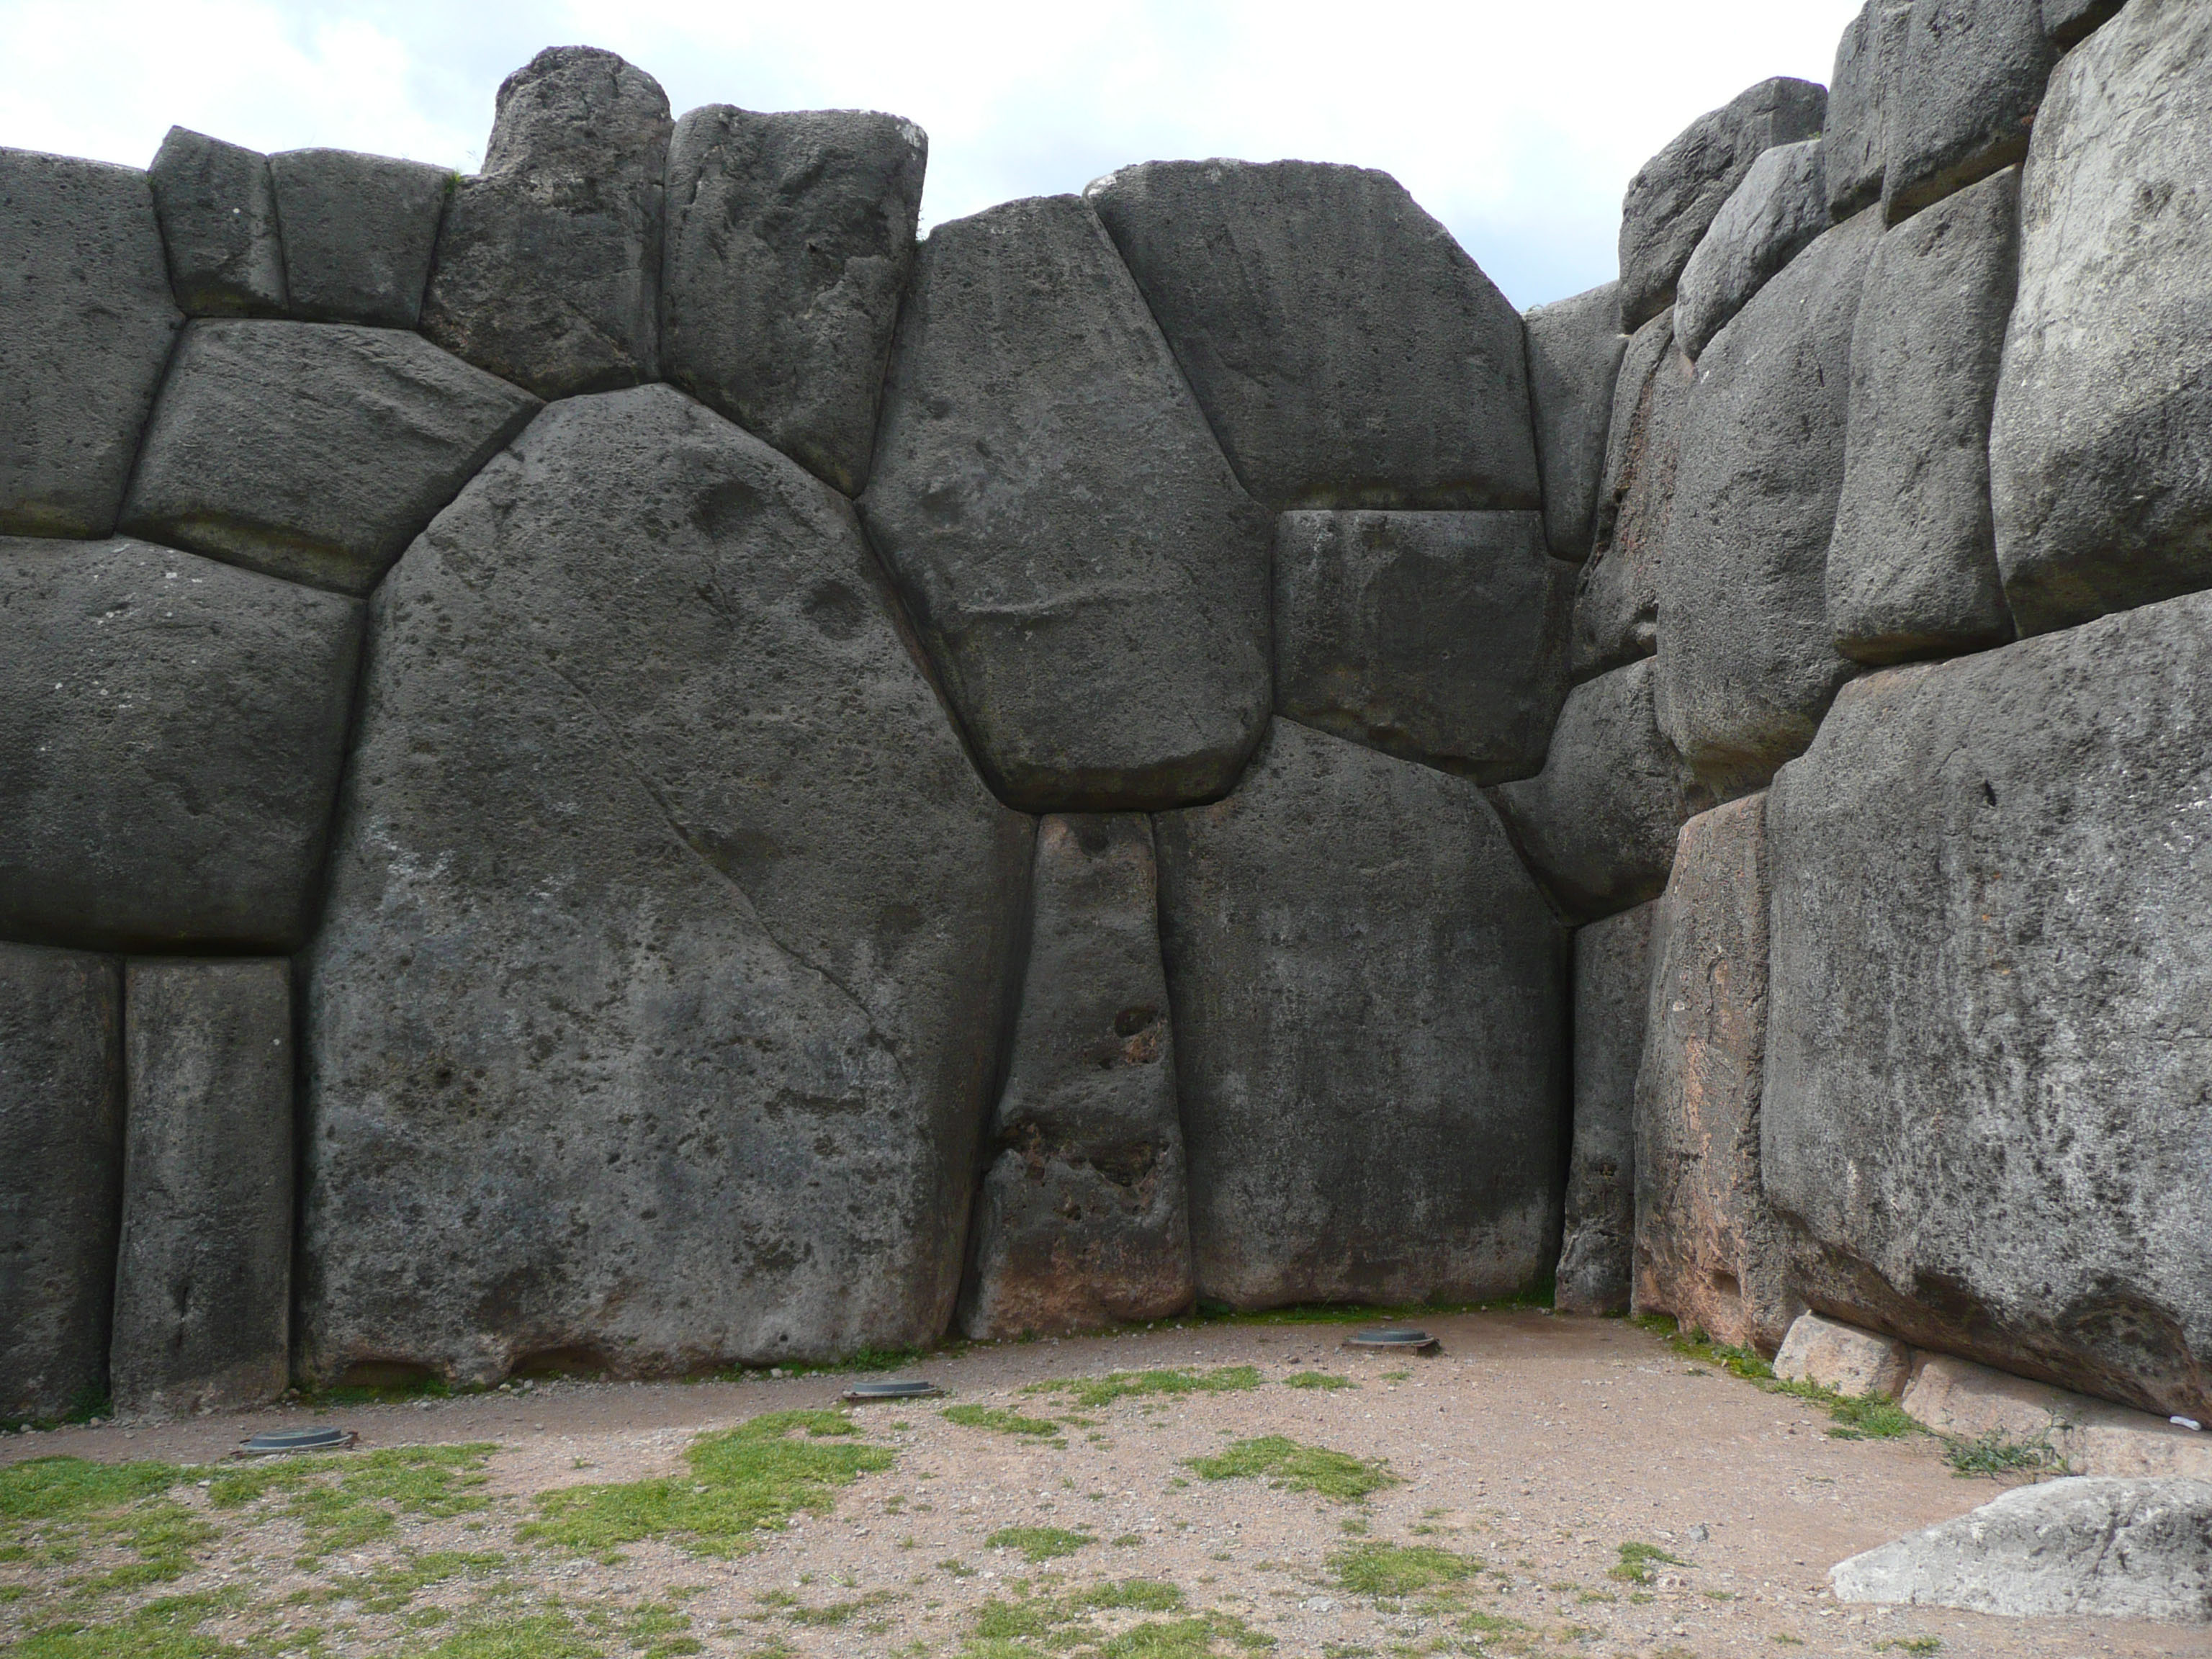 Sacsayhuaman, Peru – Molded Stones? Giants on display? Mystery ...
